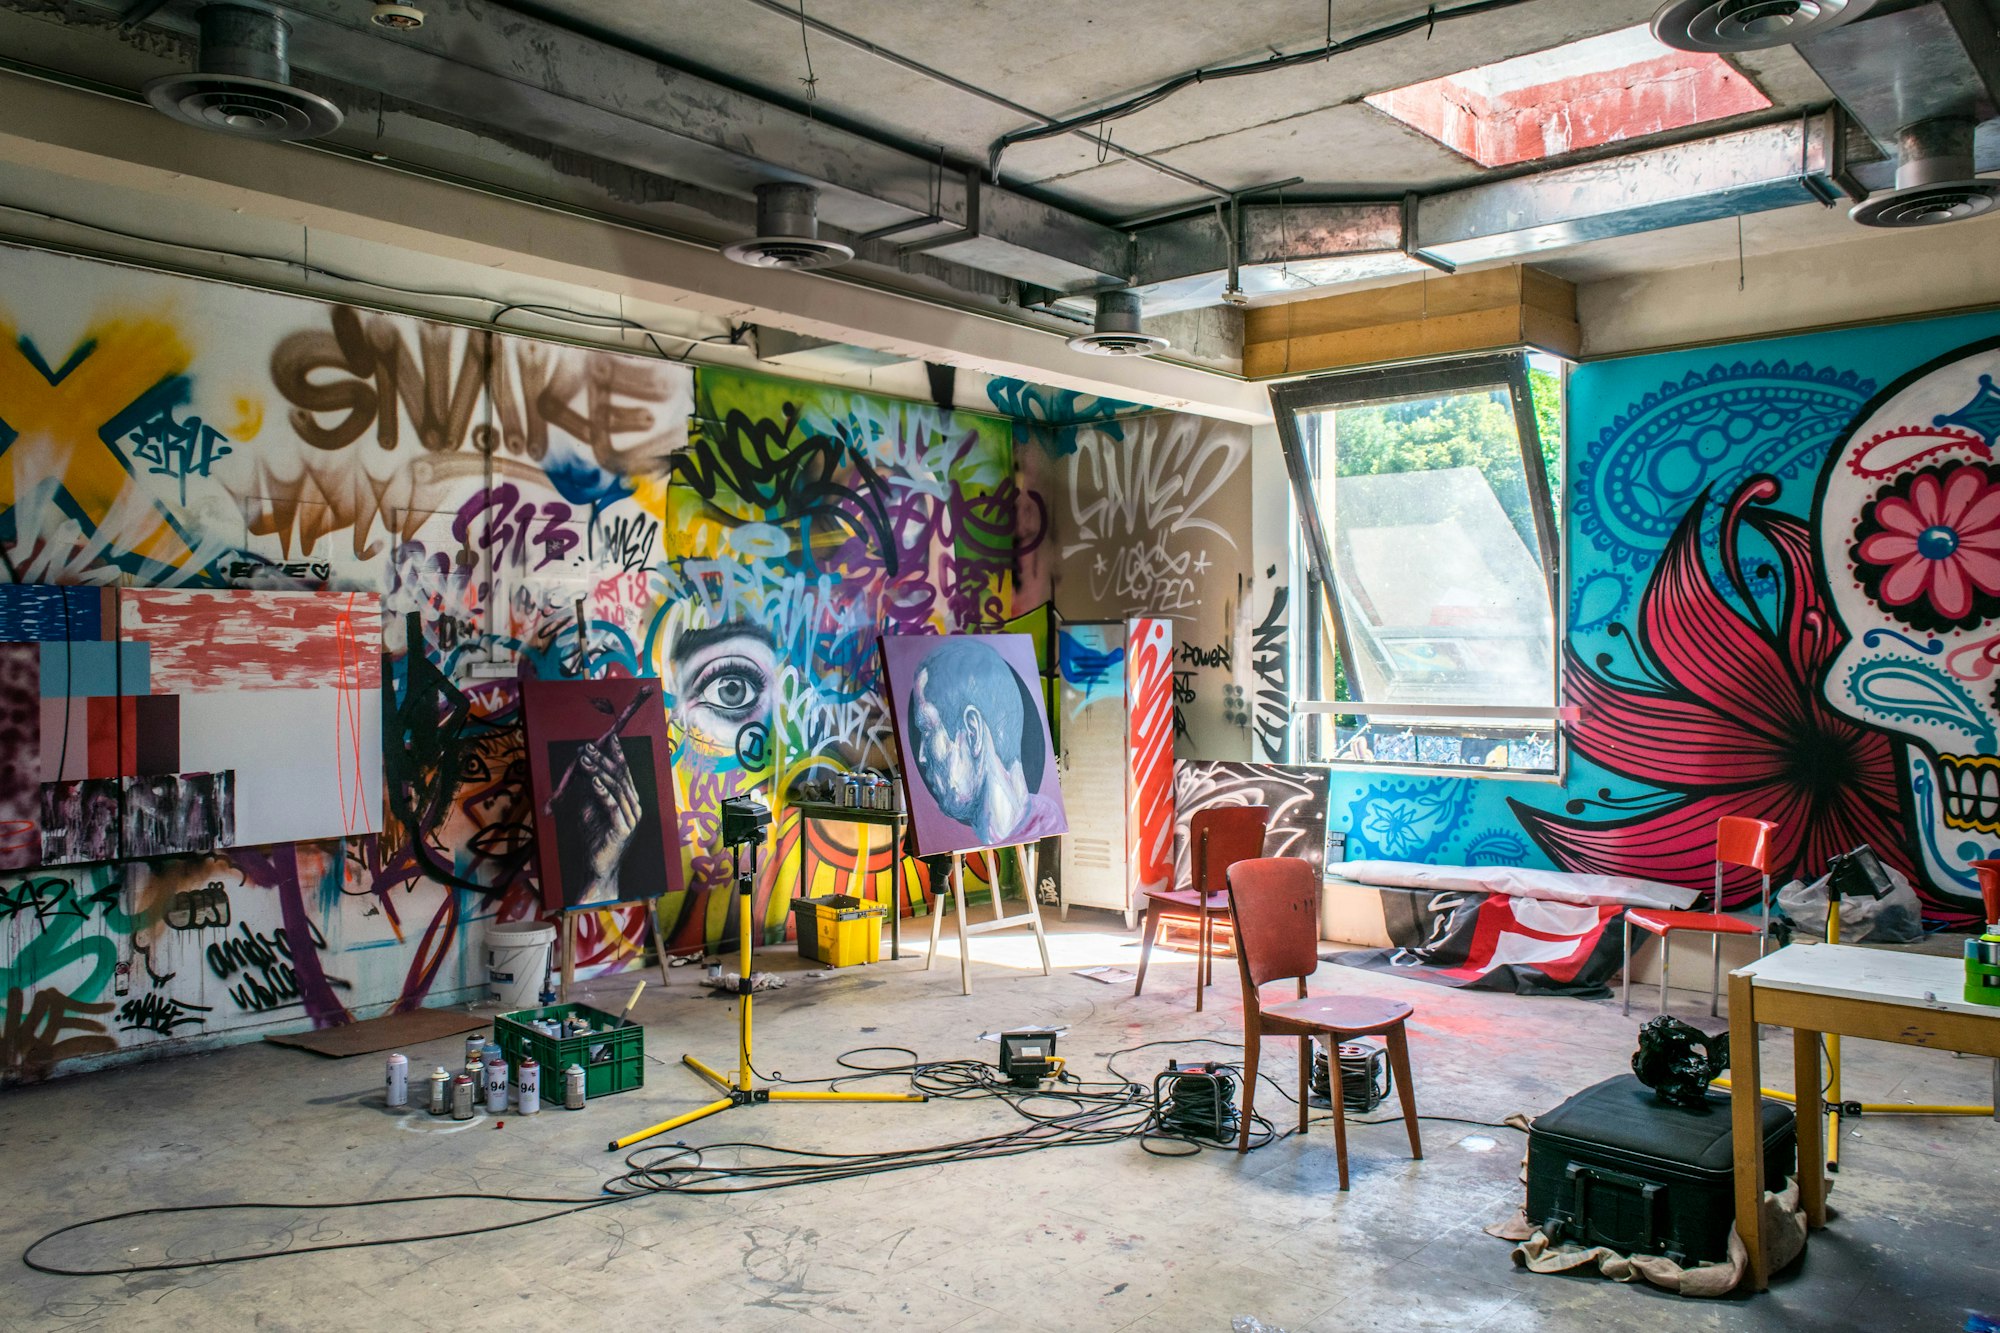 Art studio with wall graffiti